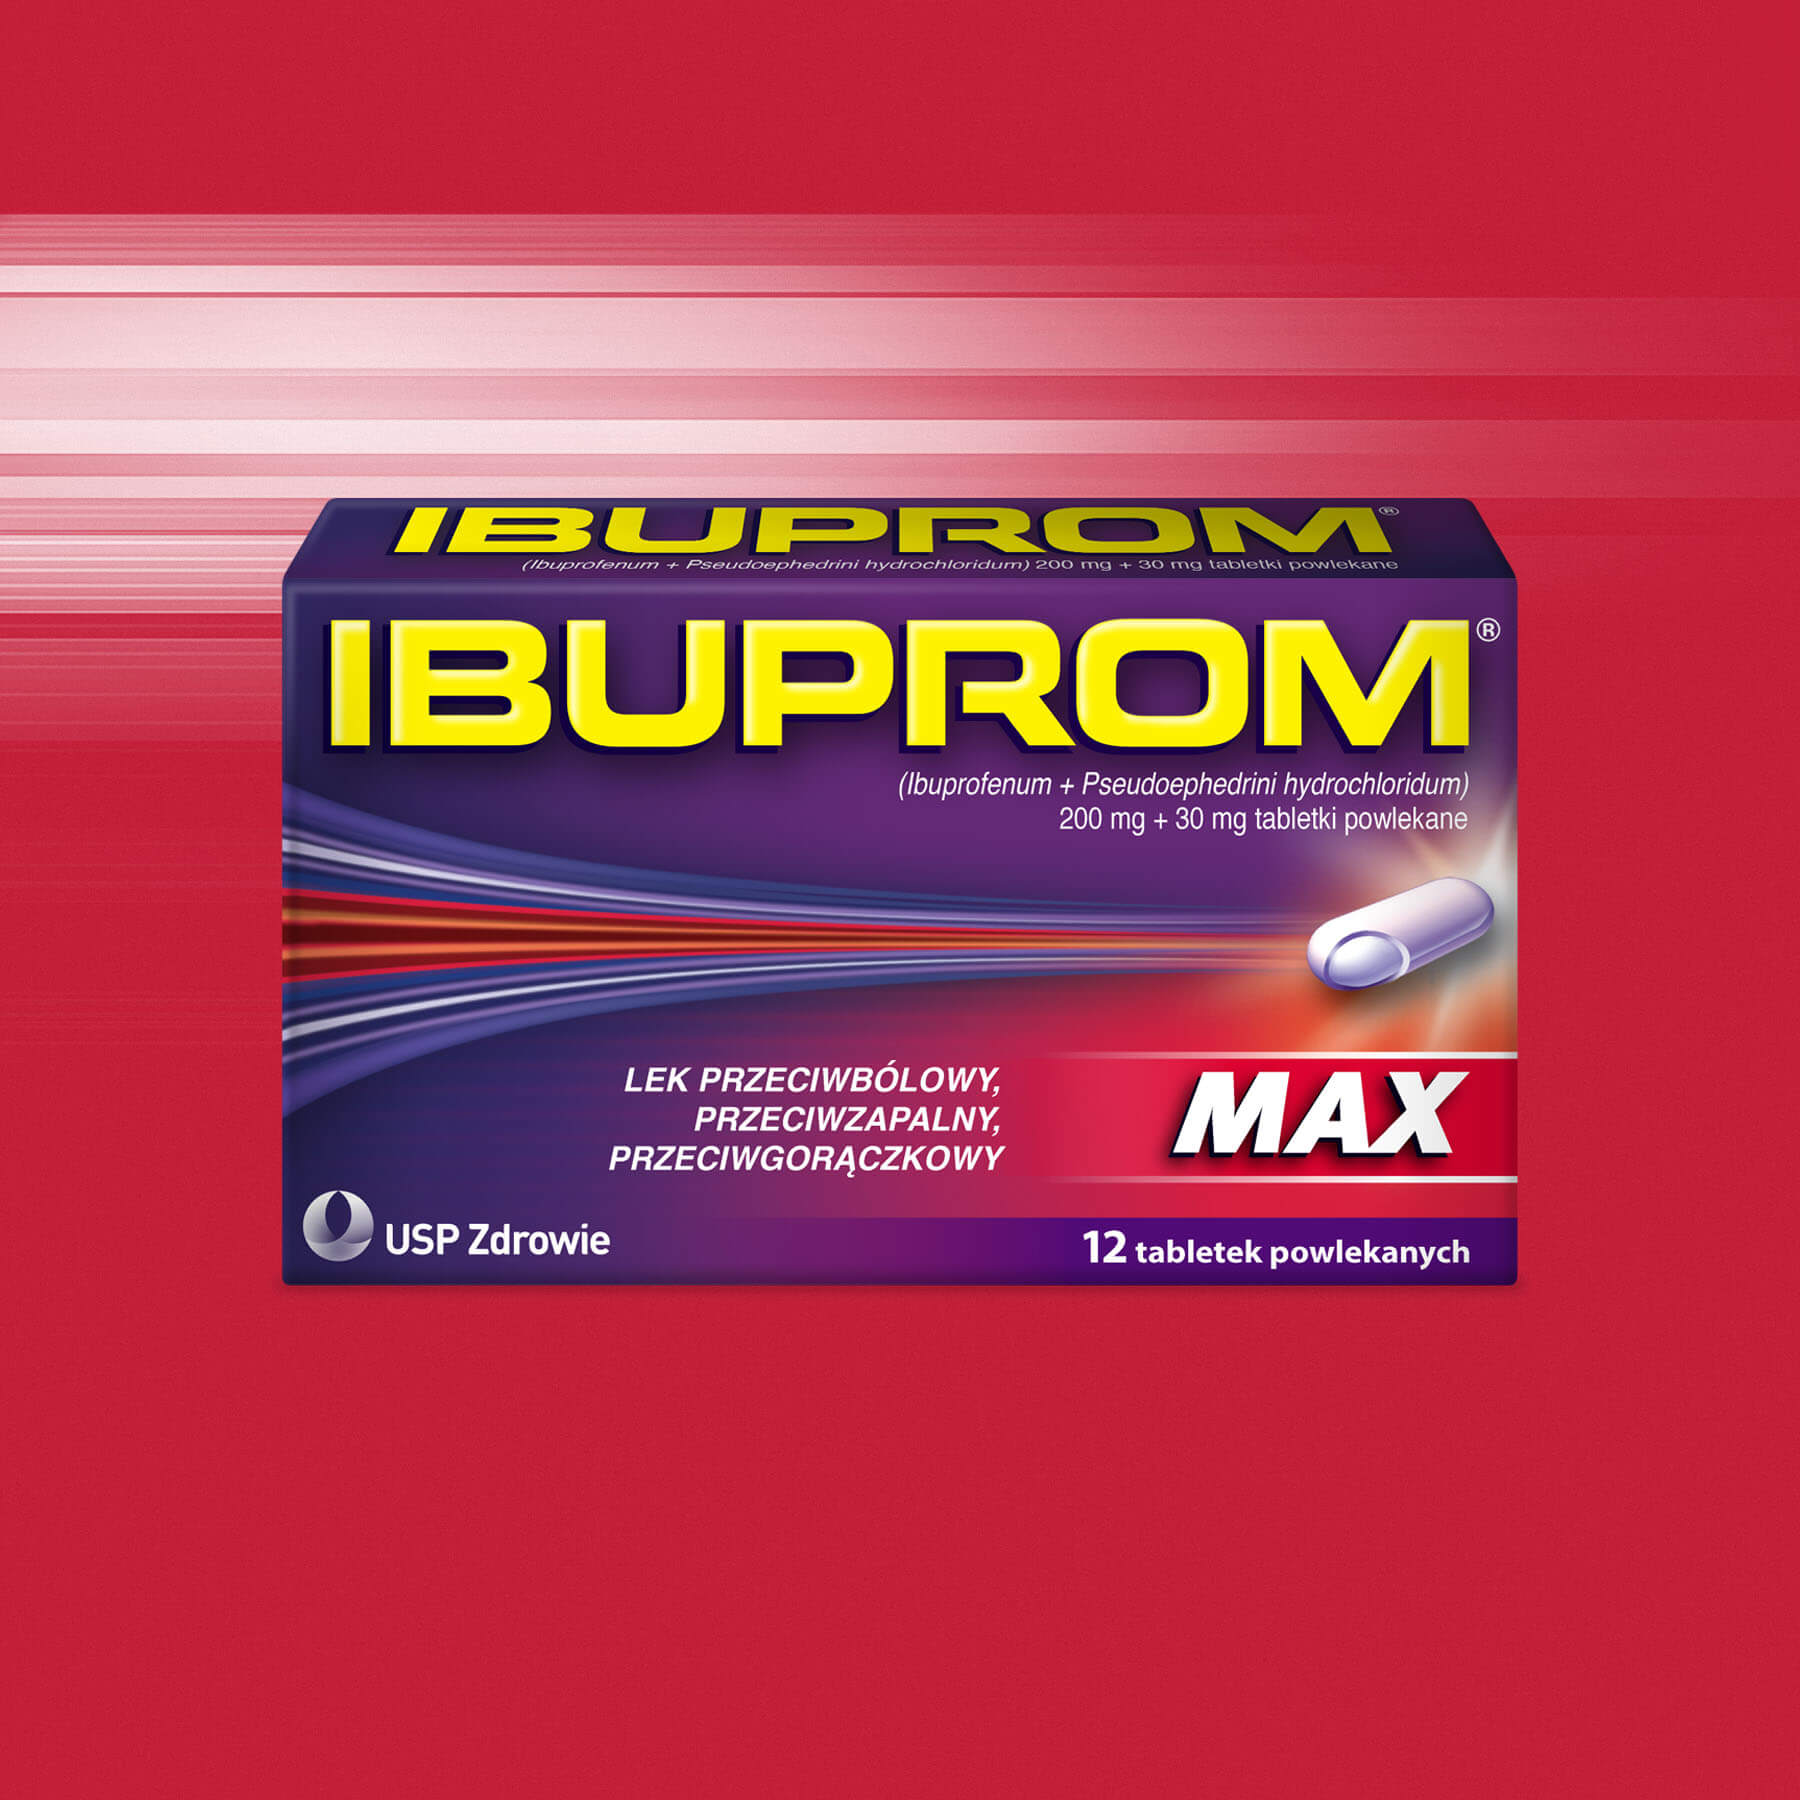 Ibuprom Max Package Design